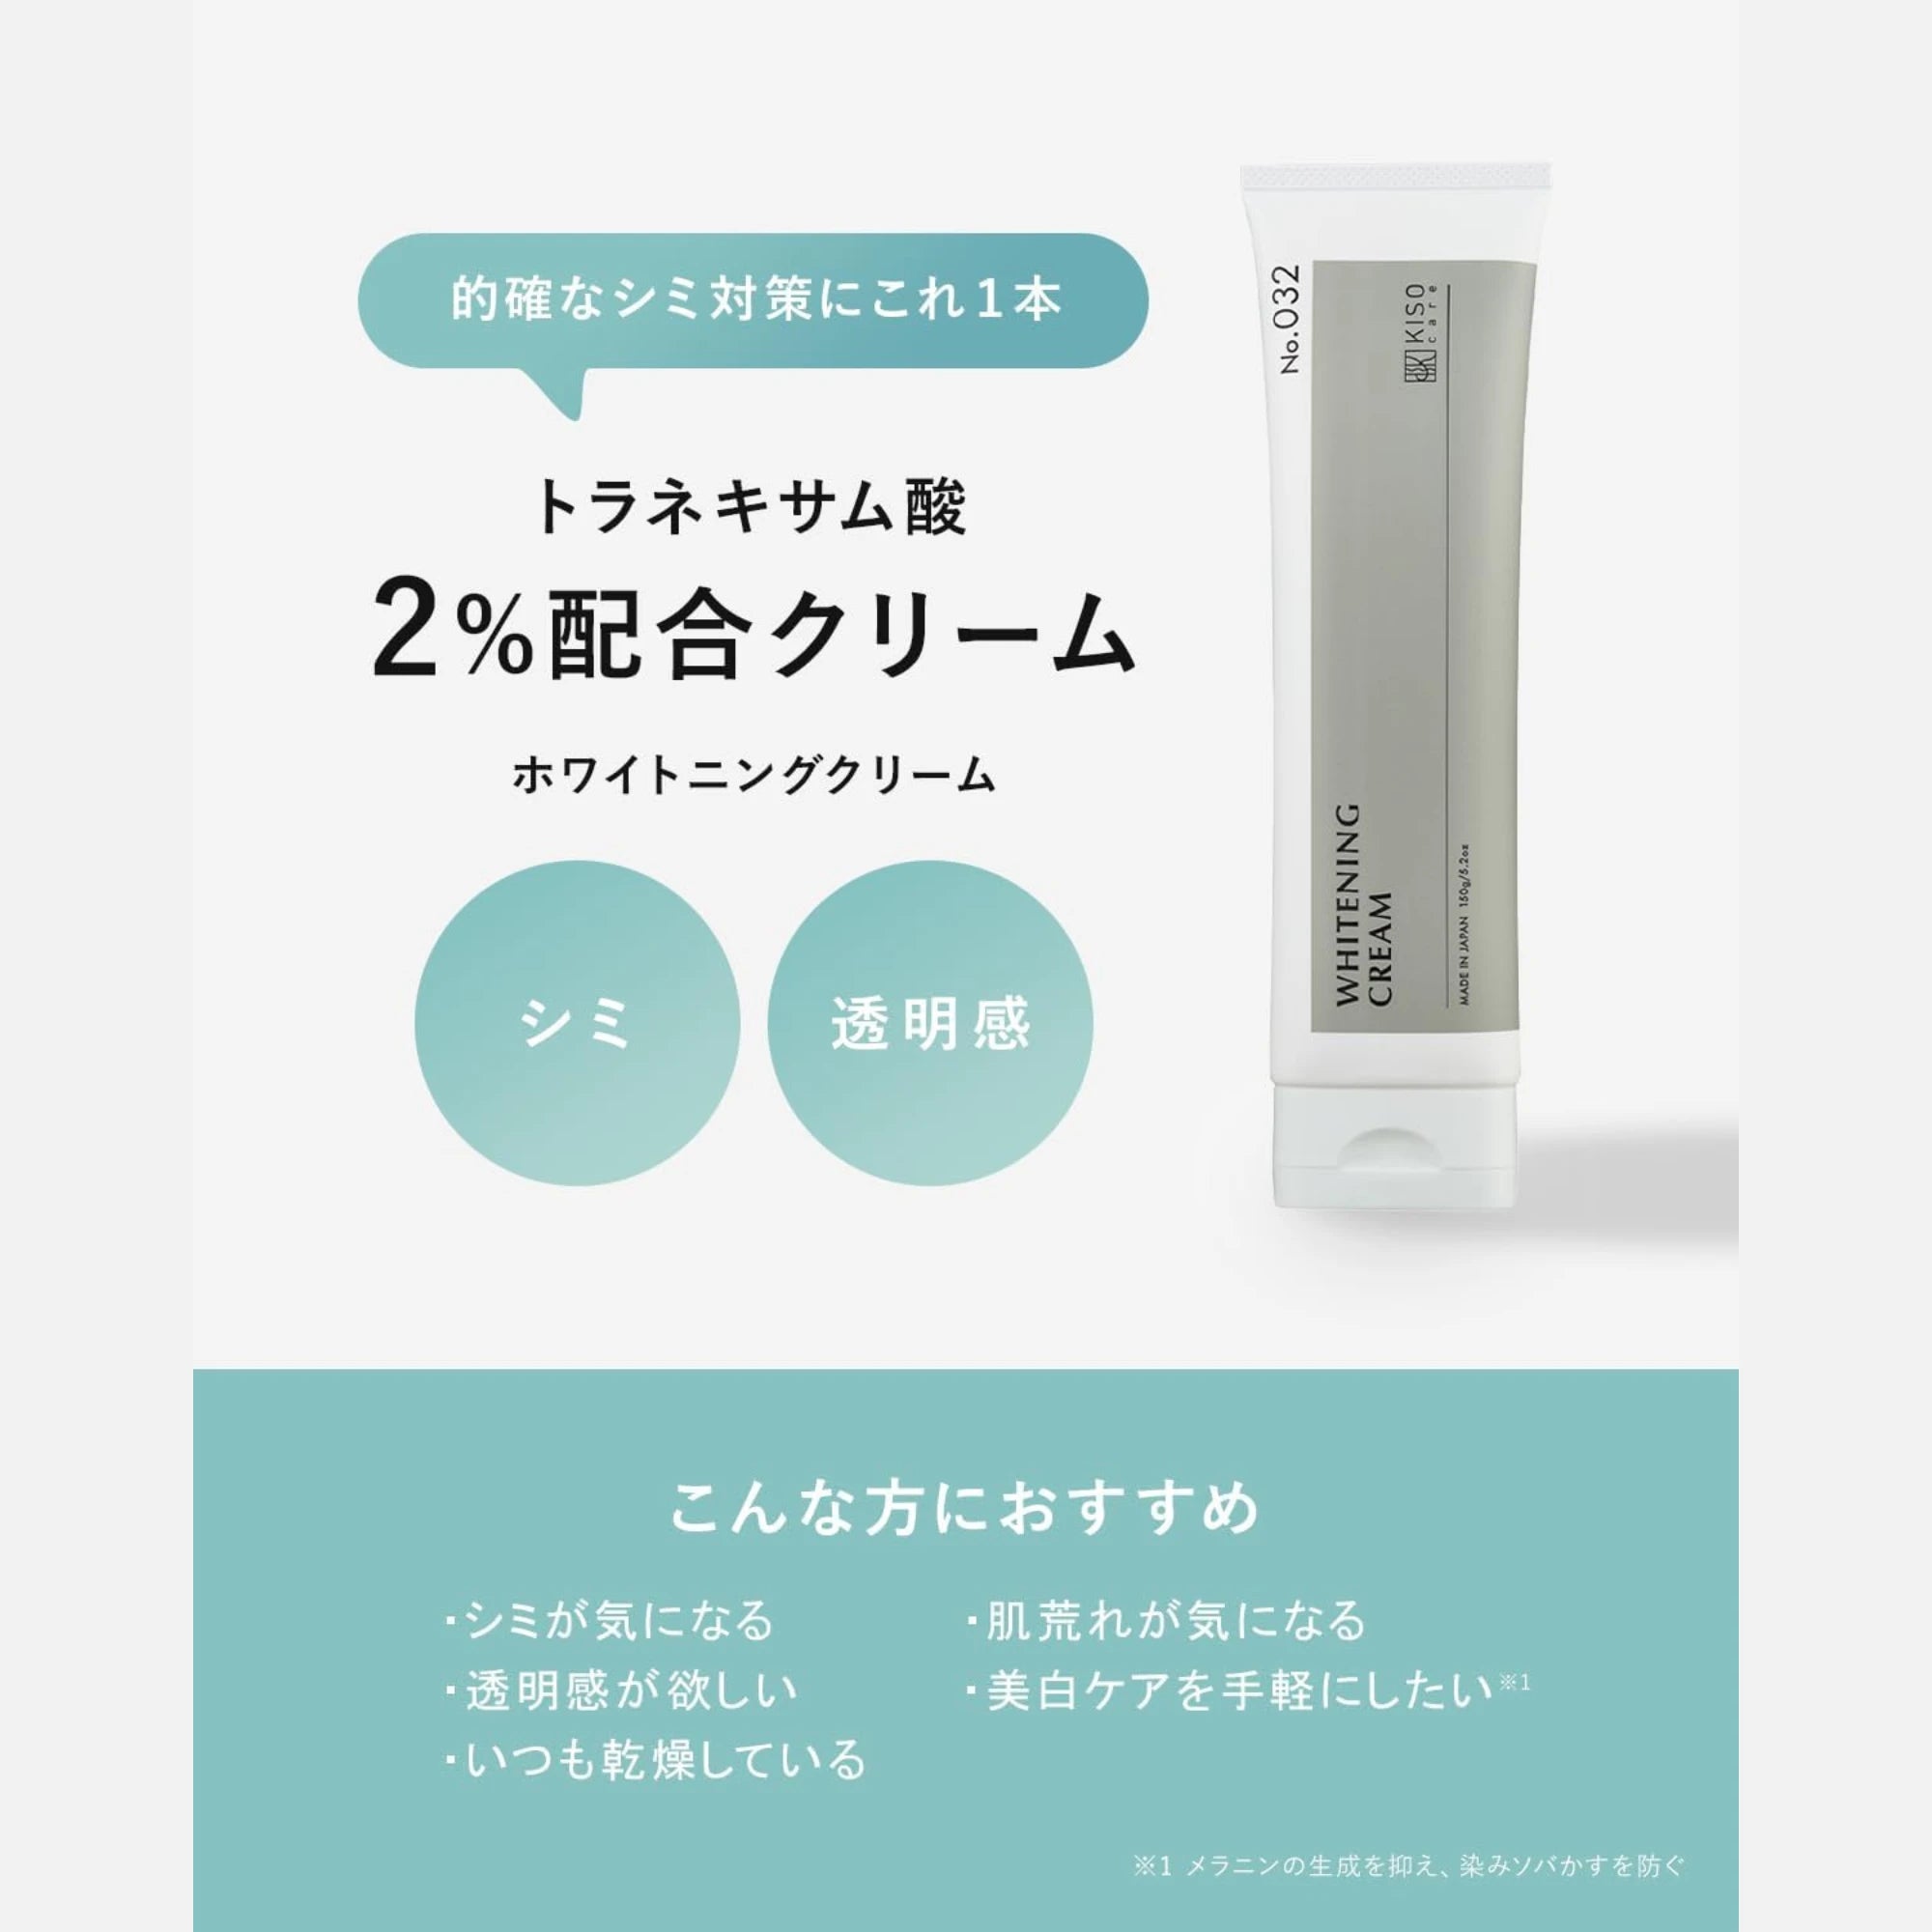 Kiso Care Whitening Cream Tranexamic Acid 2% 150g